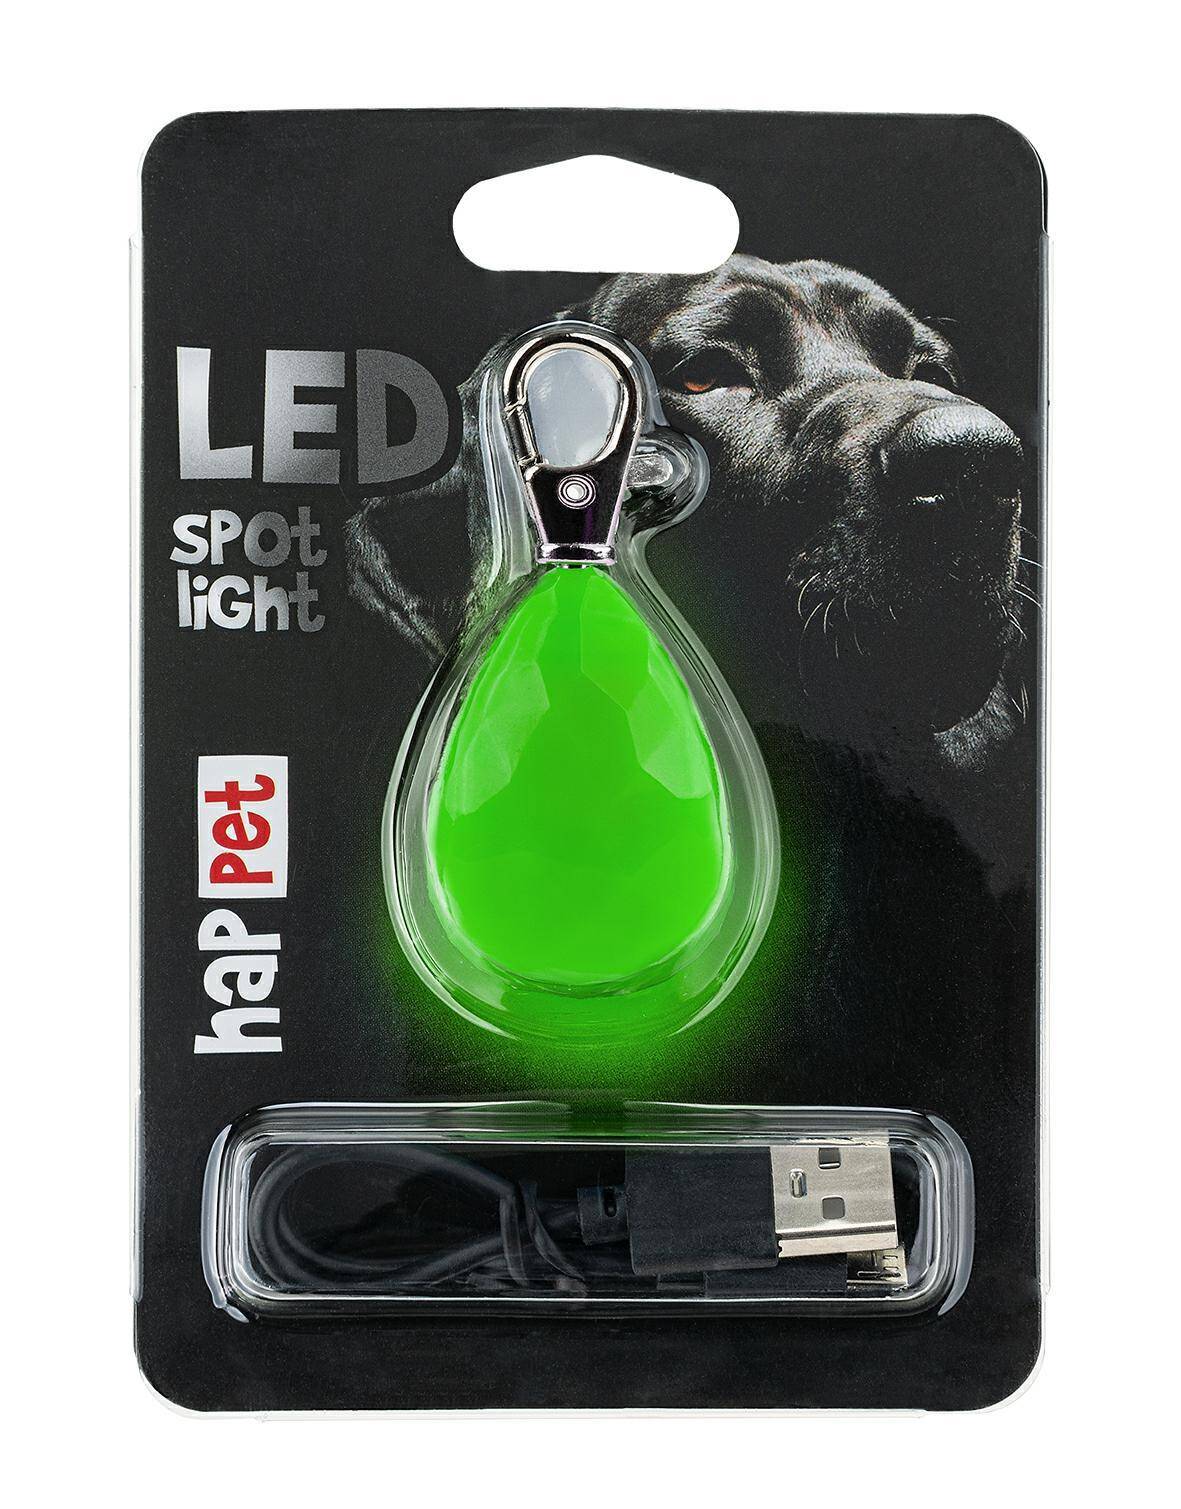 LED spot light green diamond